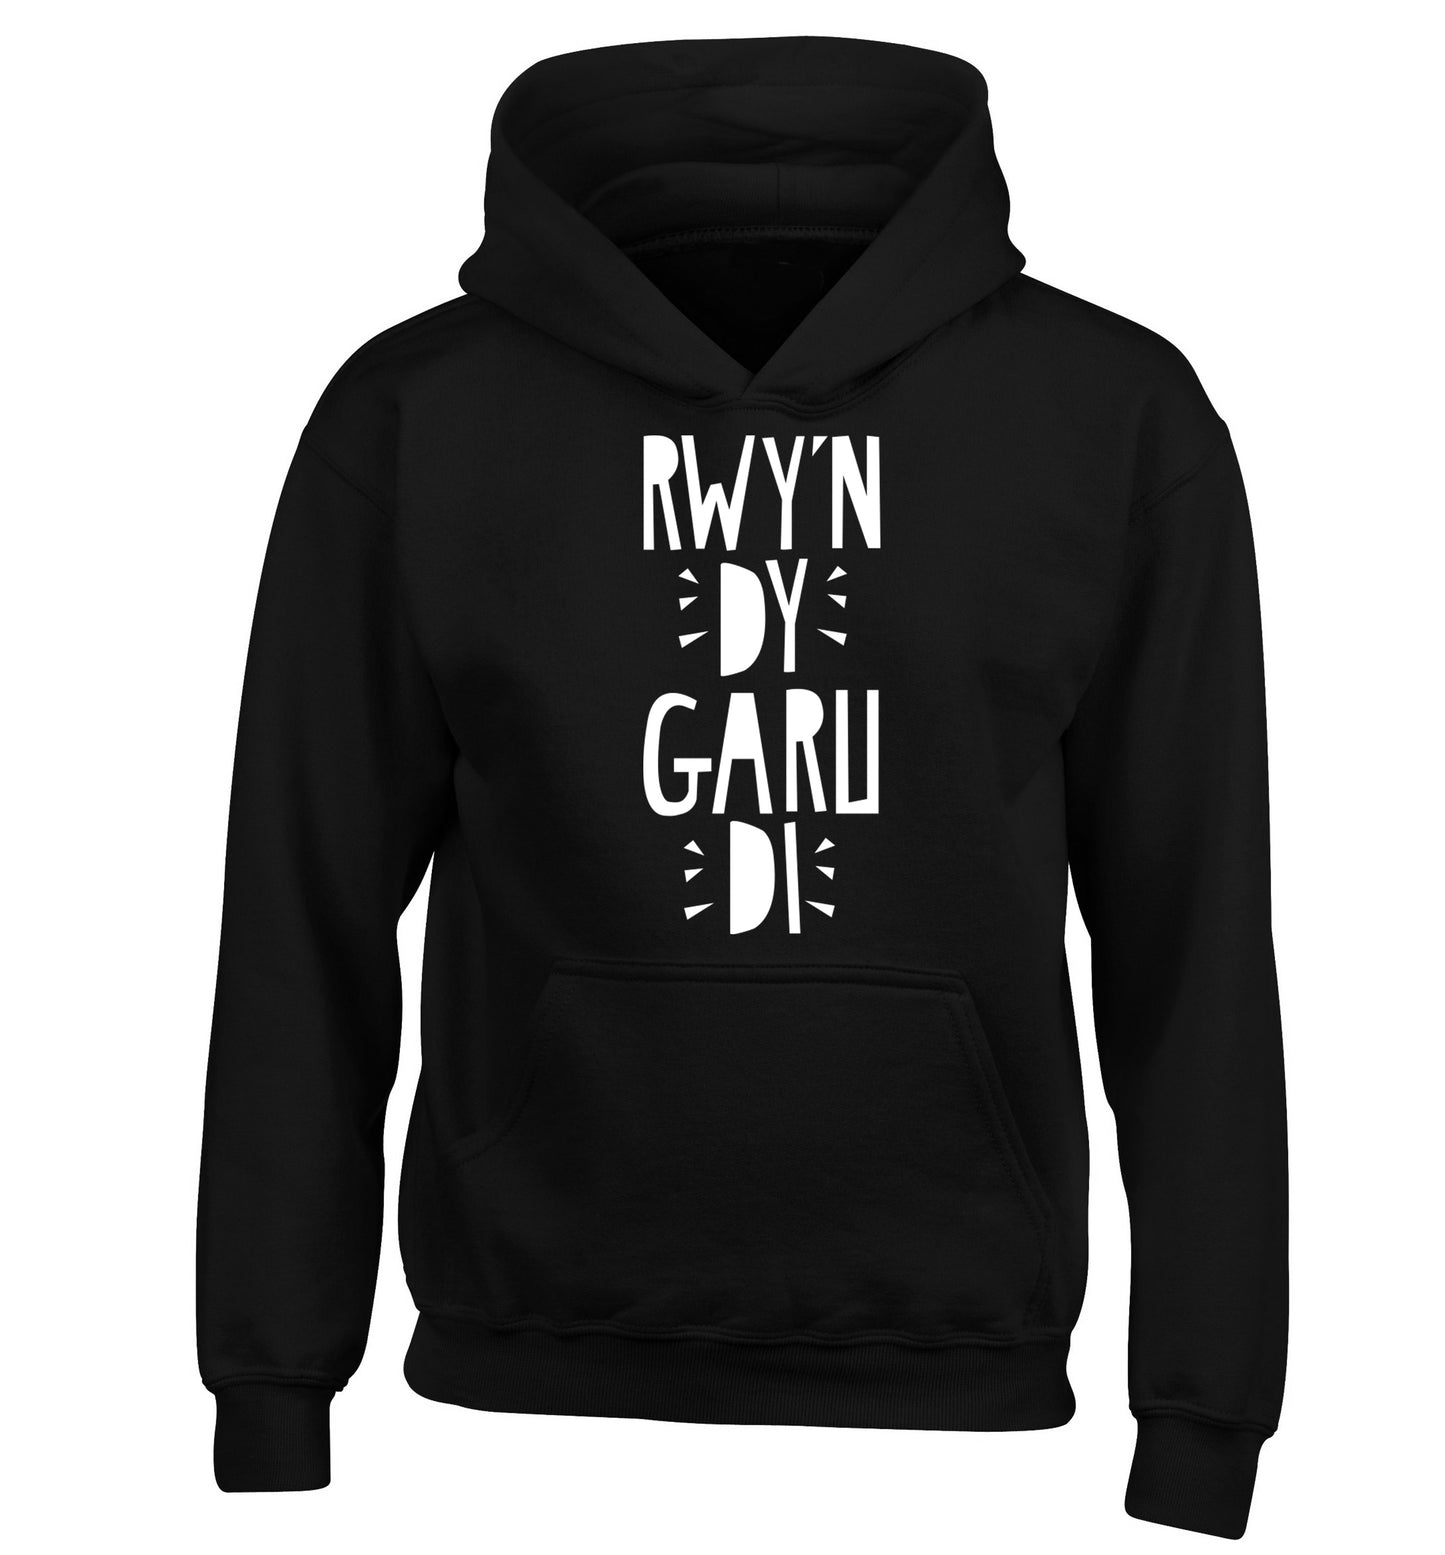 Rwy'n dy garu di - I love you children's black hoodie 12-13 Years